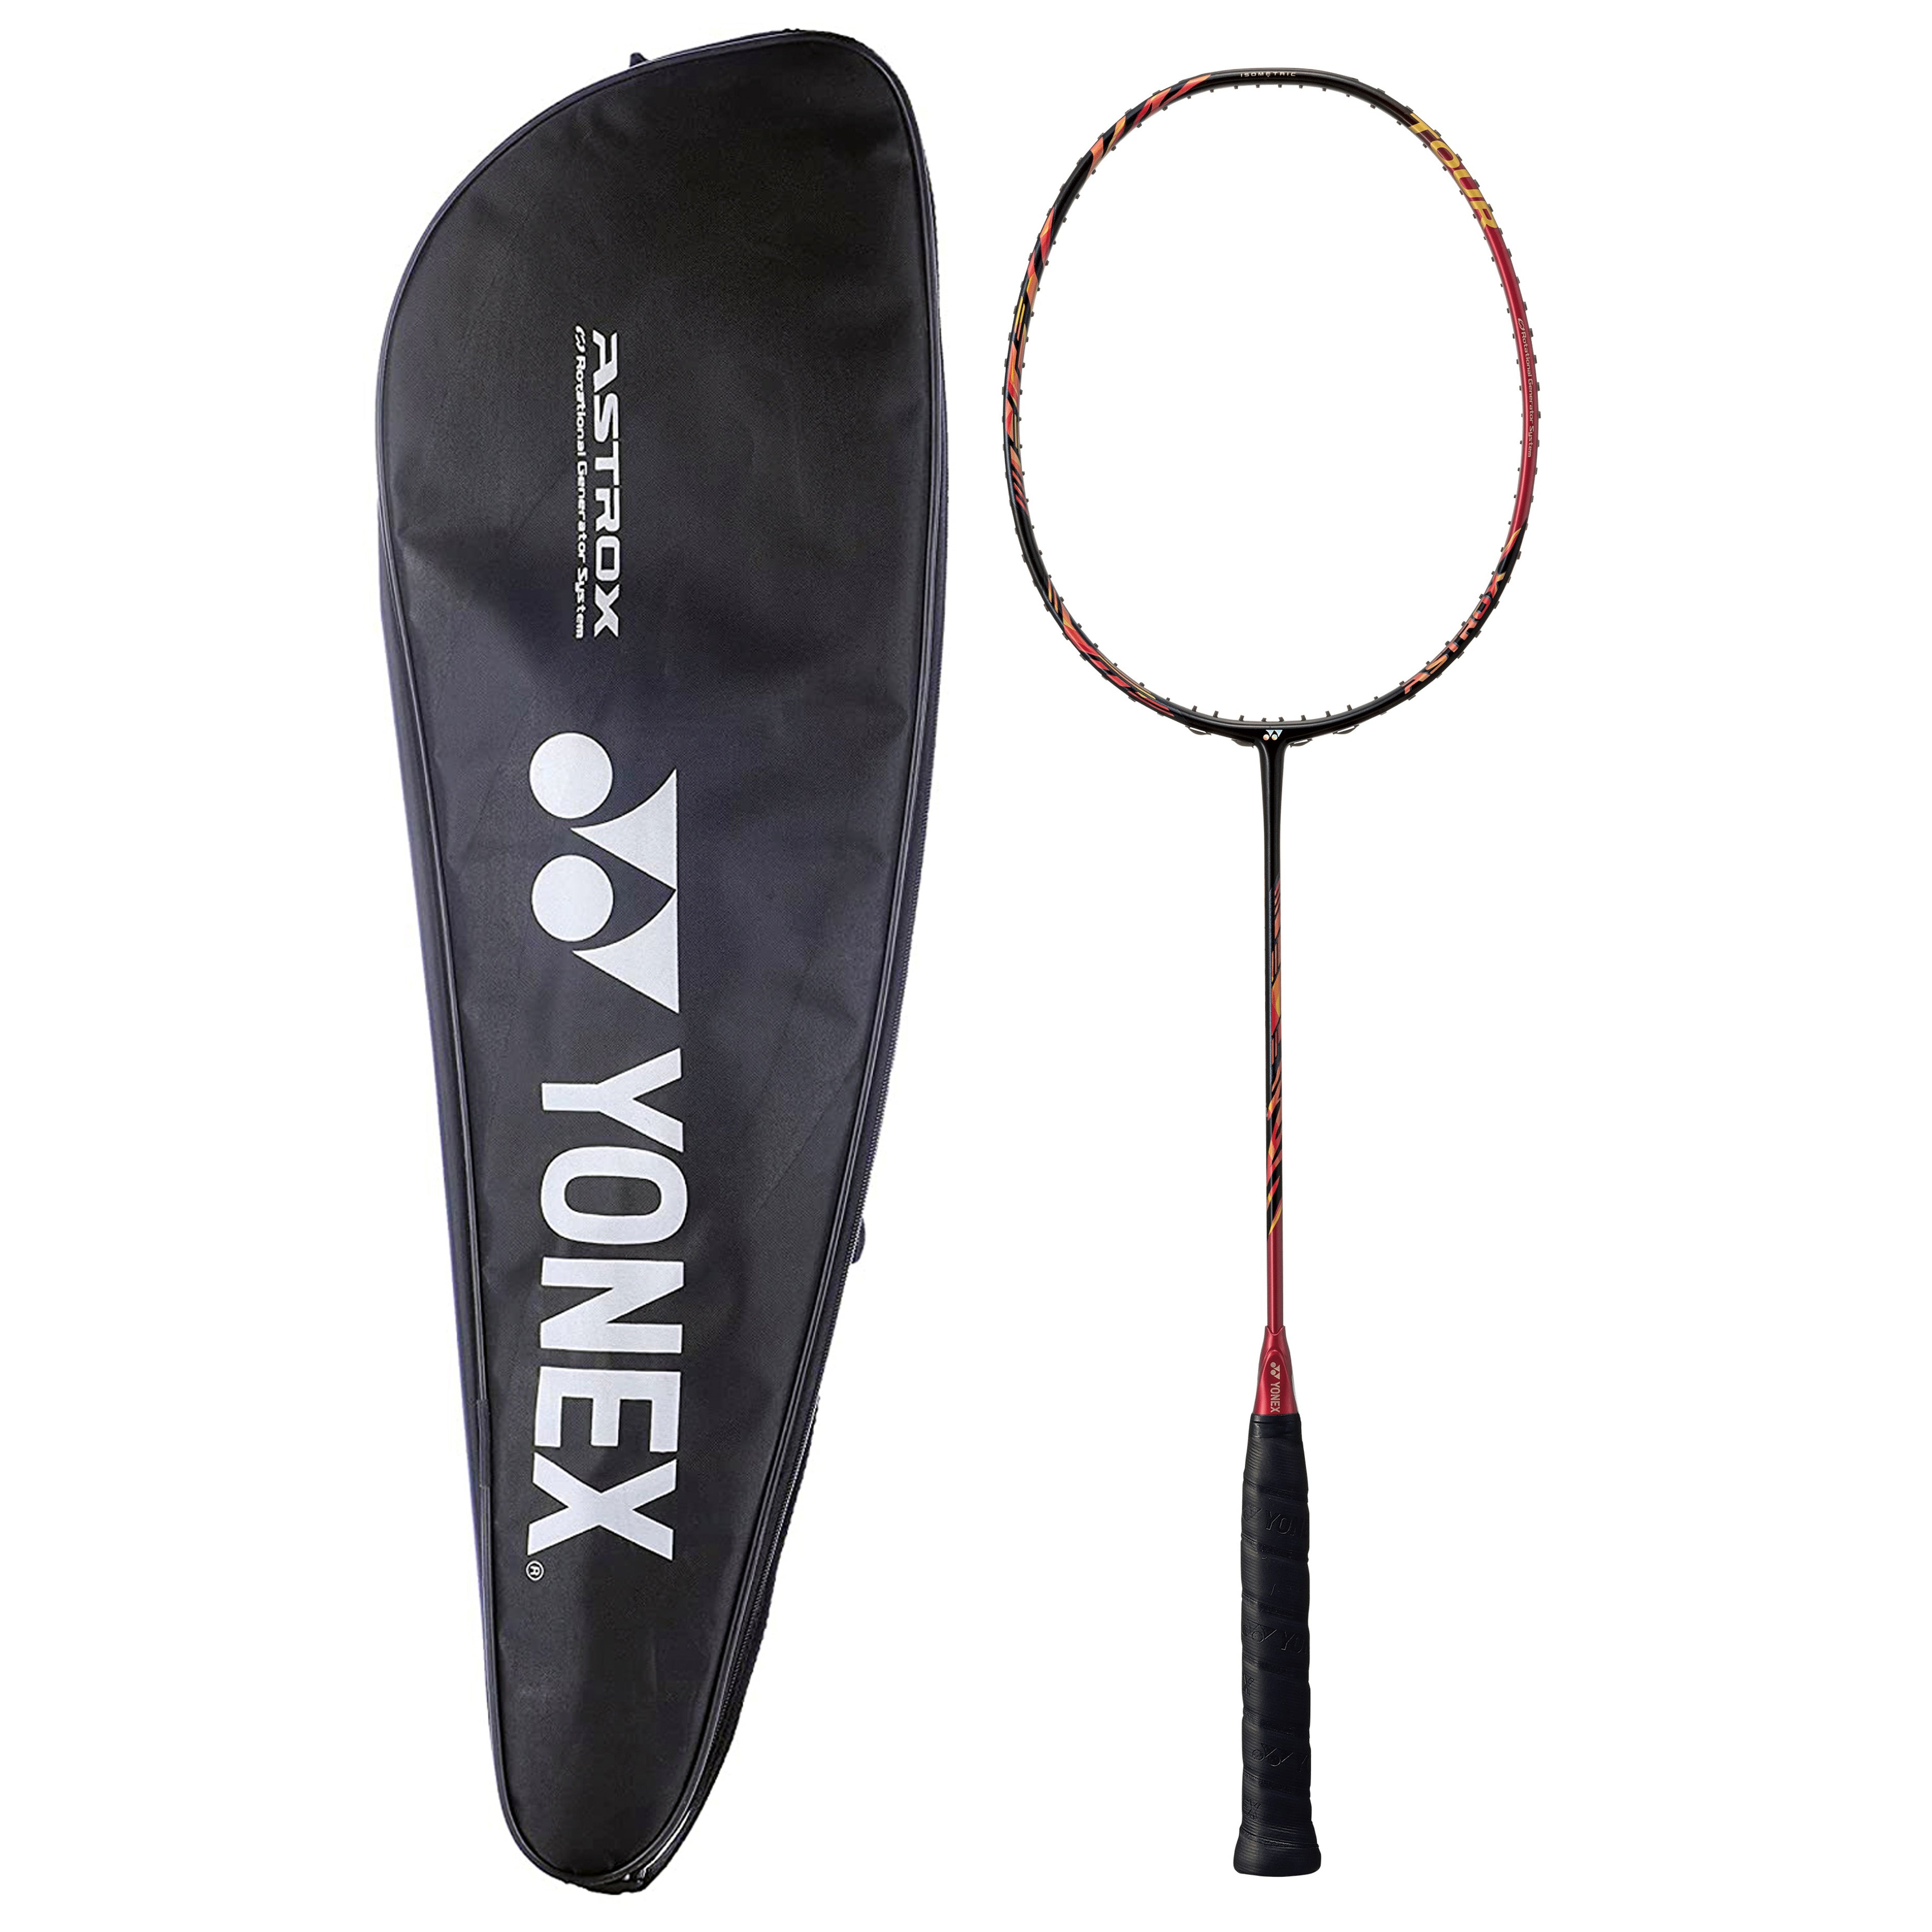 Yonex Astrox 99 TOUR Strung Badminton Racquet, 4U5